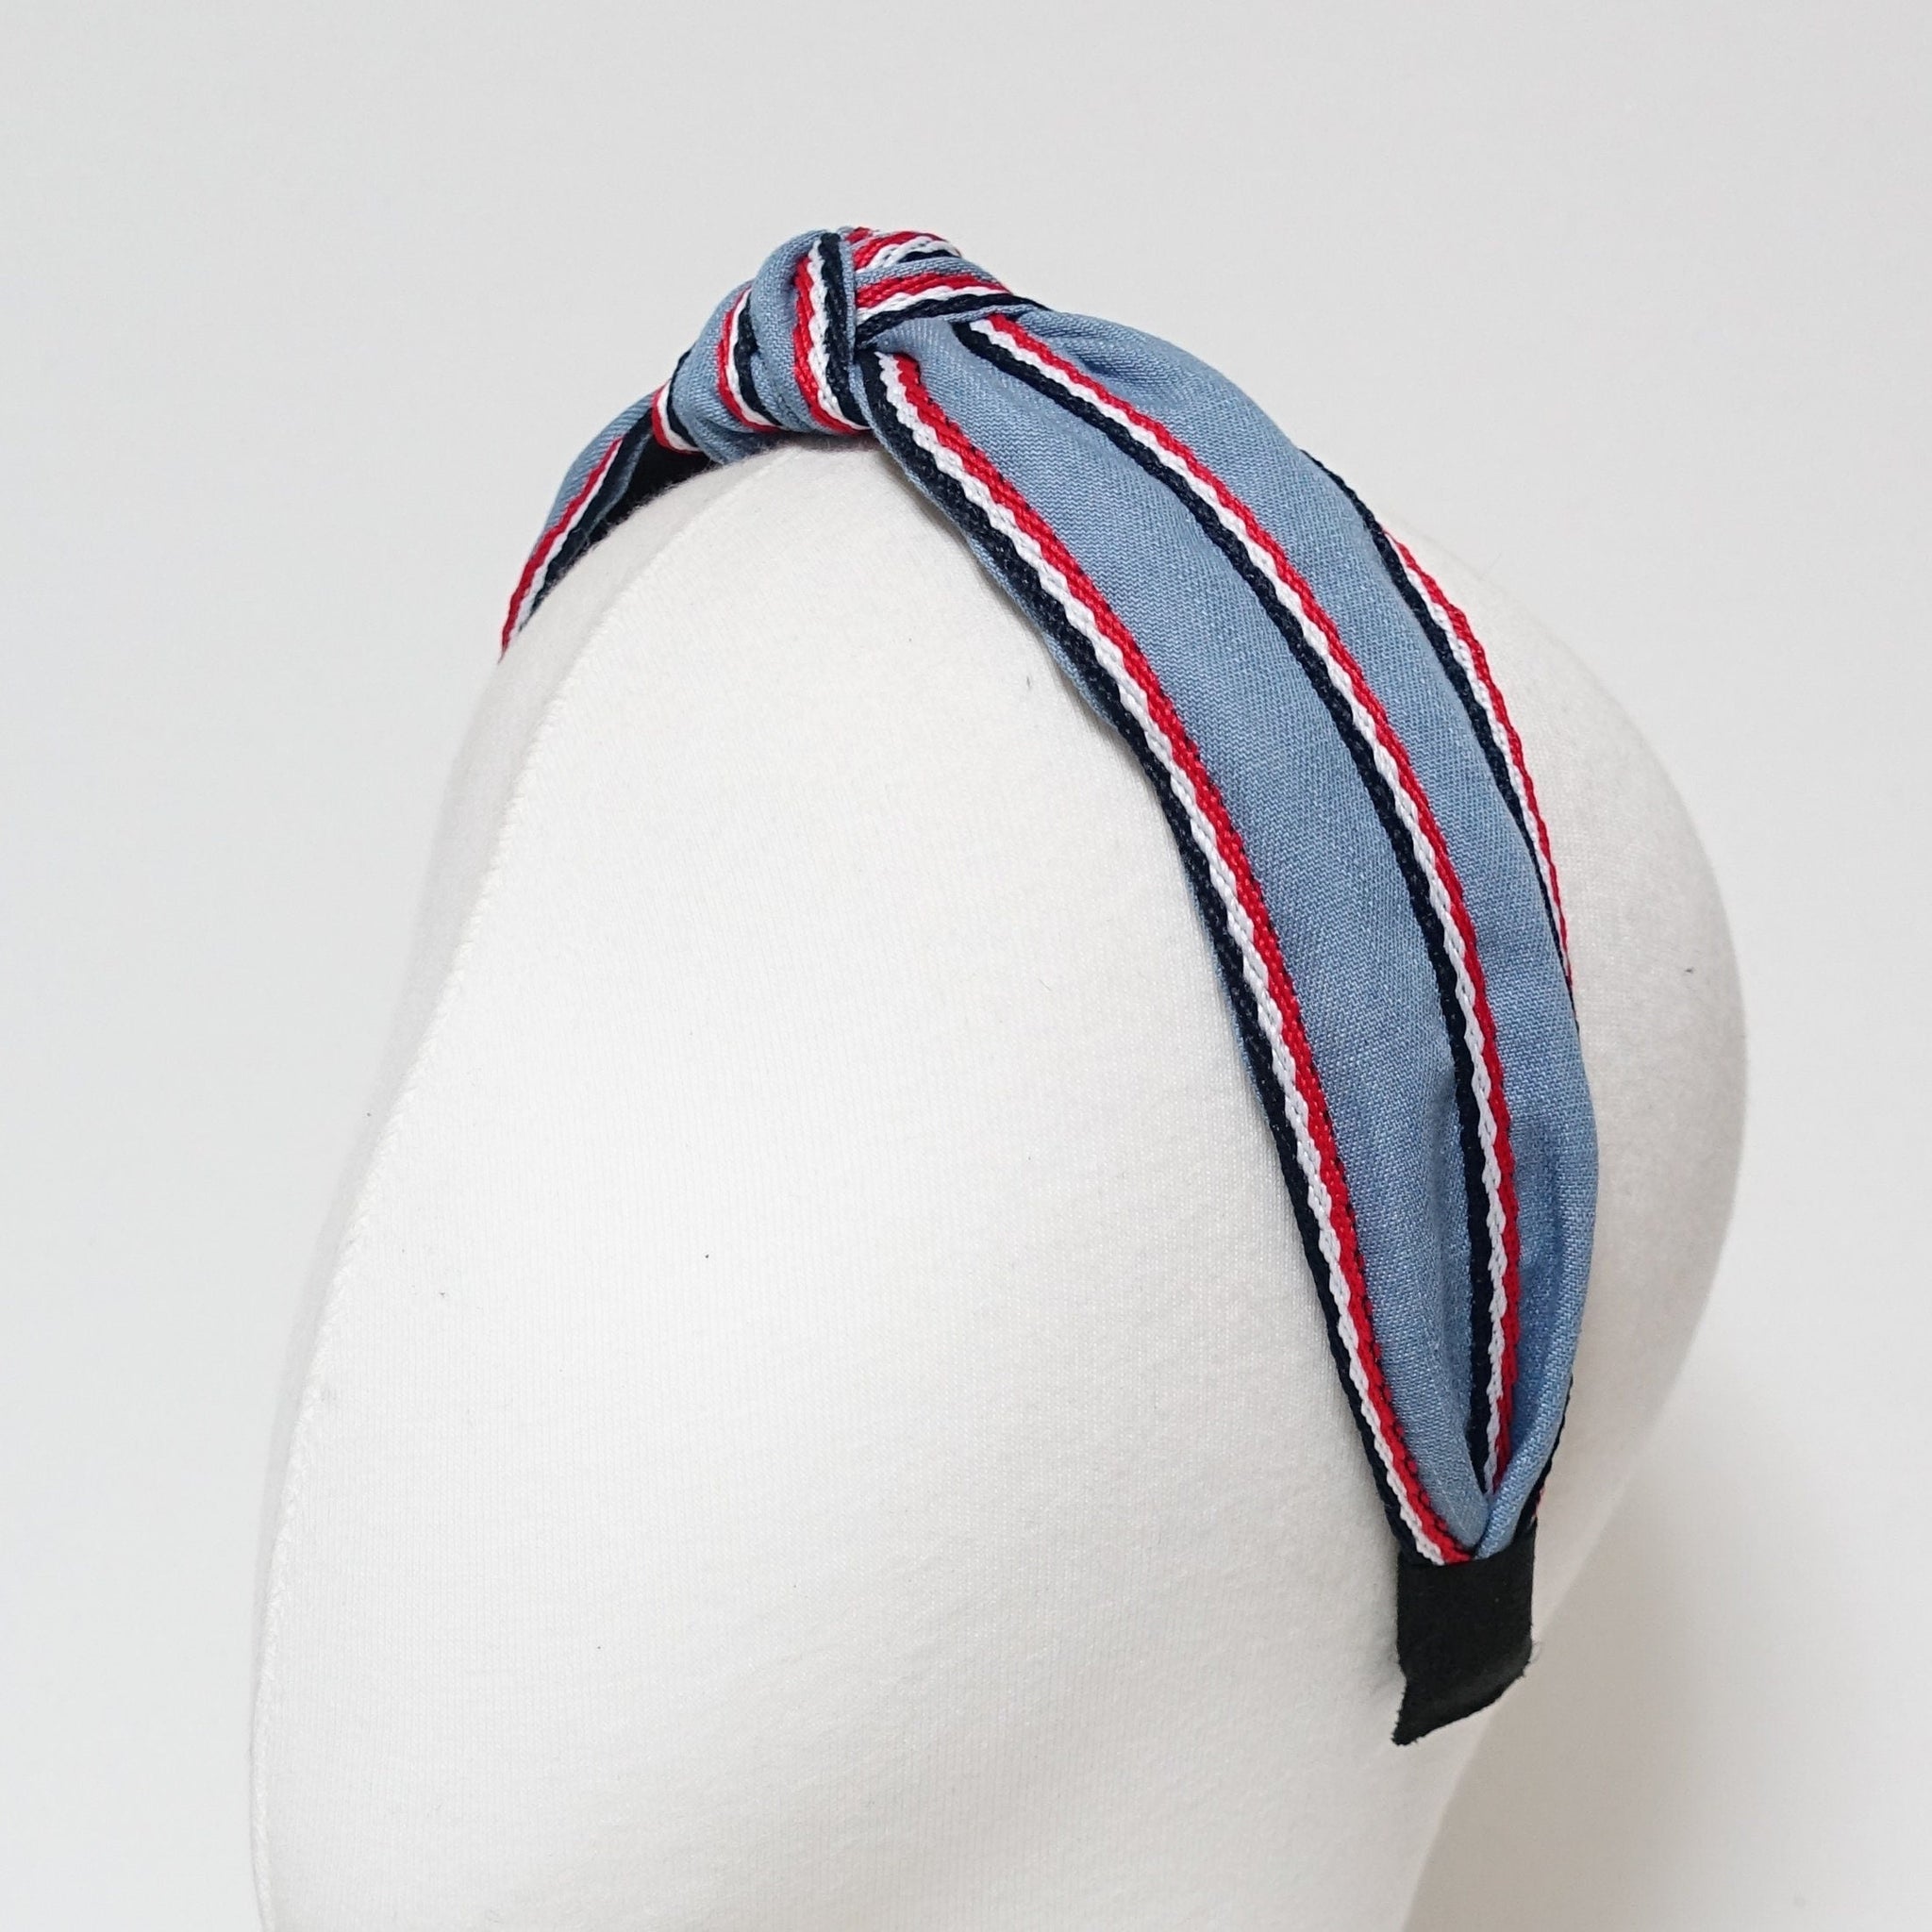 veryshine.com Headband denim knot headband stripe line edge denim hairband woman hair accessory